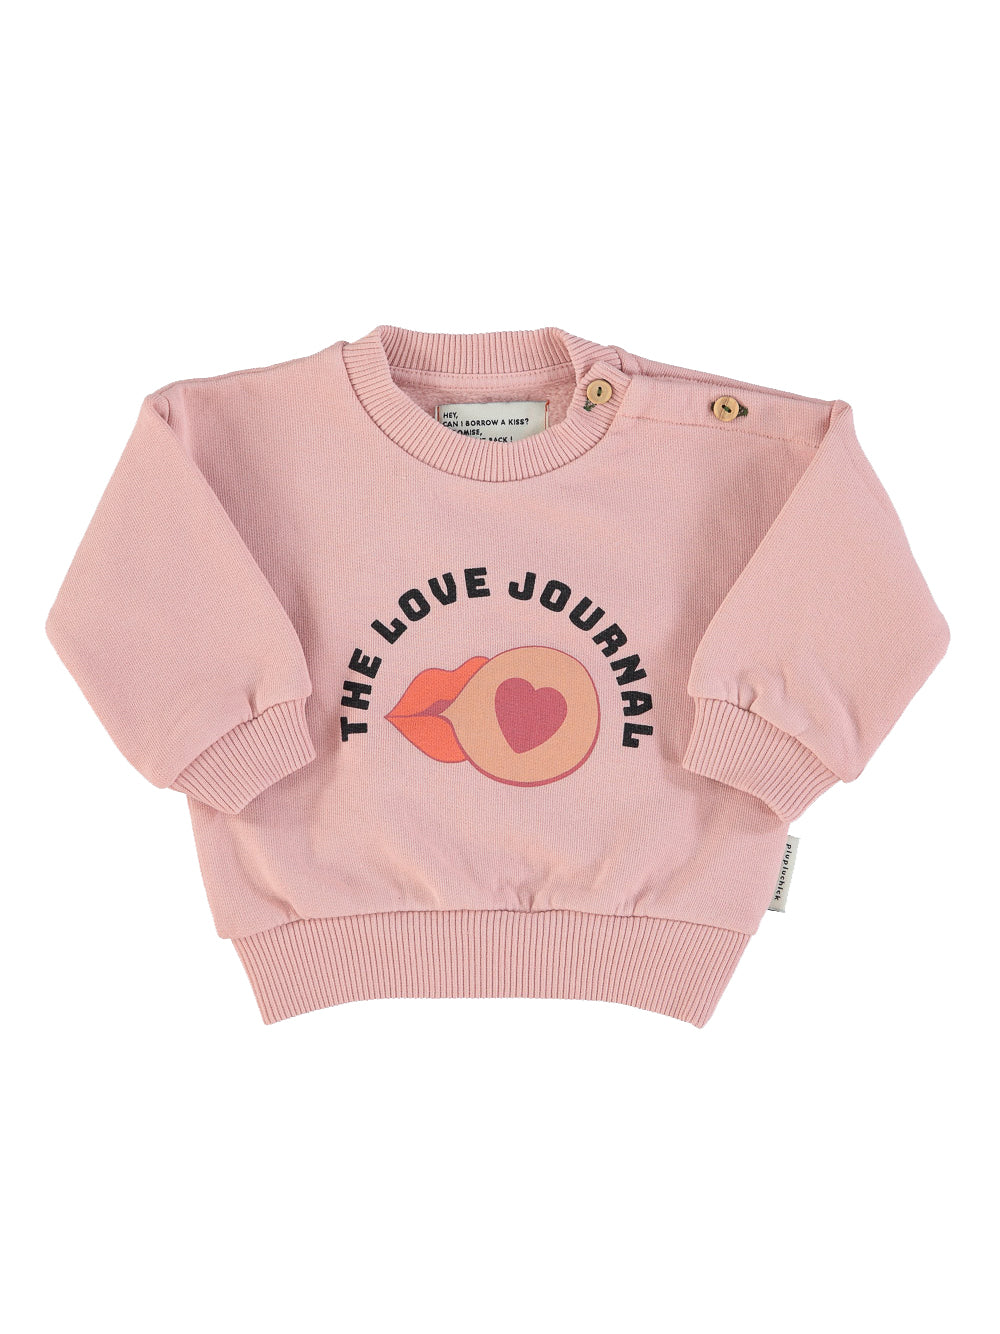 The Love Journal Print Baby Sweatshirt